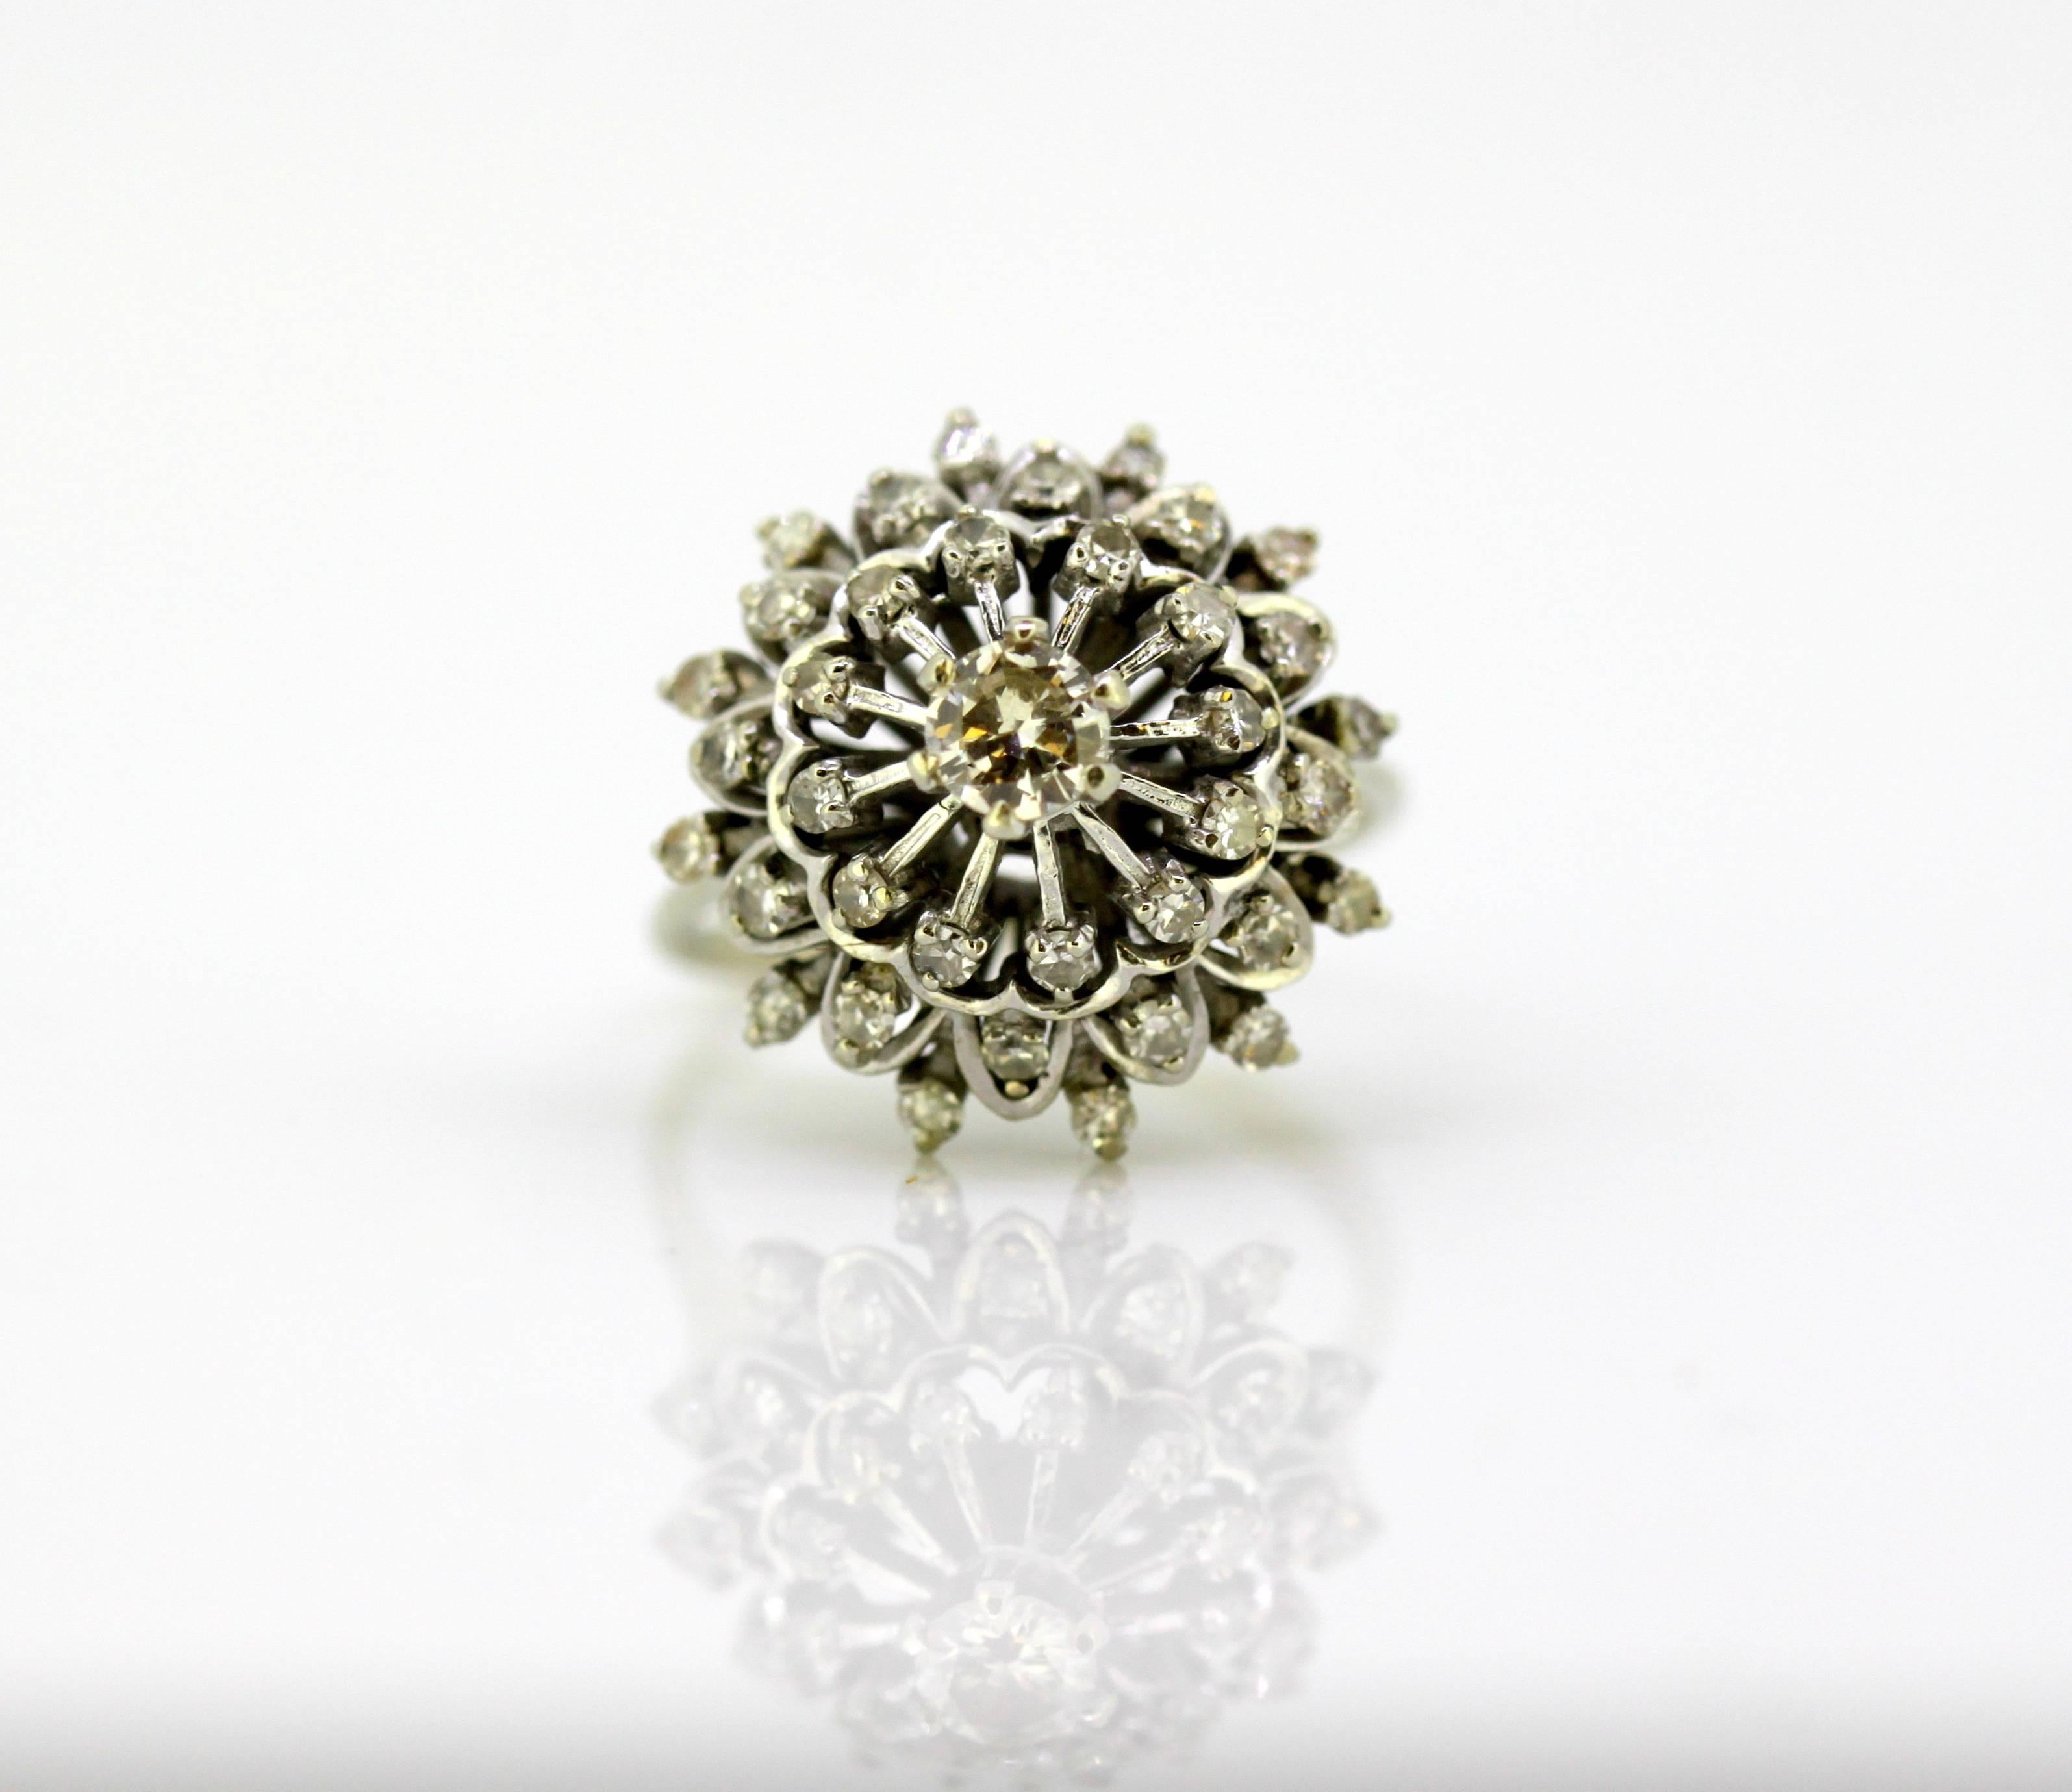 Art Deco 18 Karat Gold Ladies Cluster Ring with Diamonds '0.61 Carat Total' 3